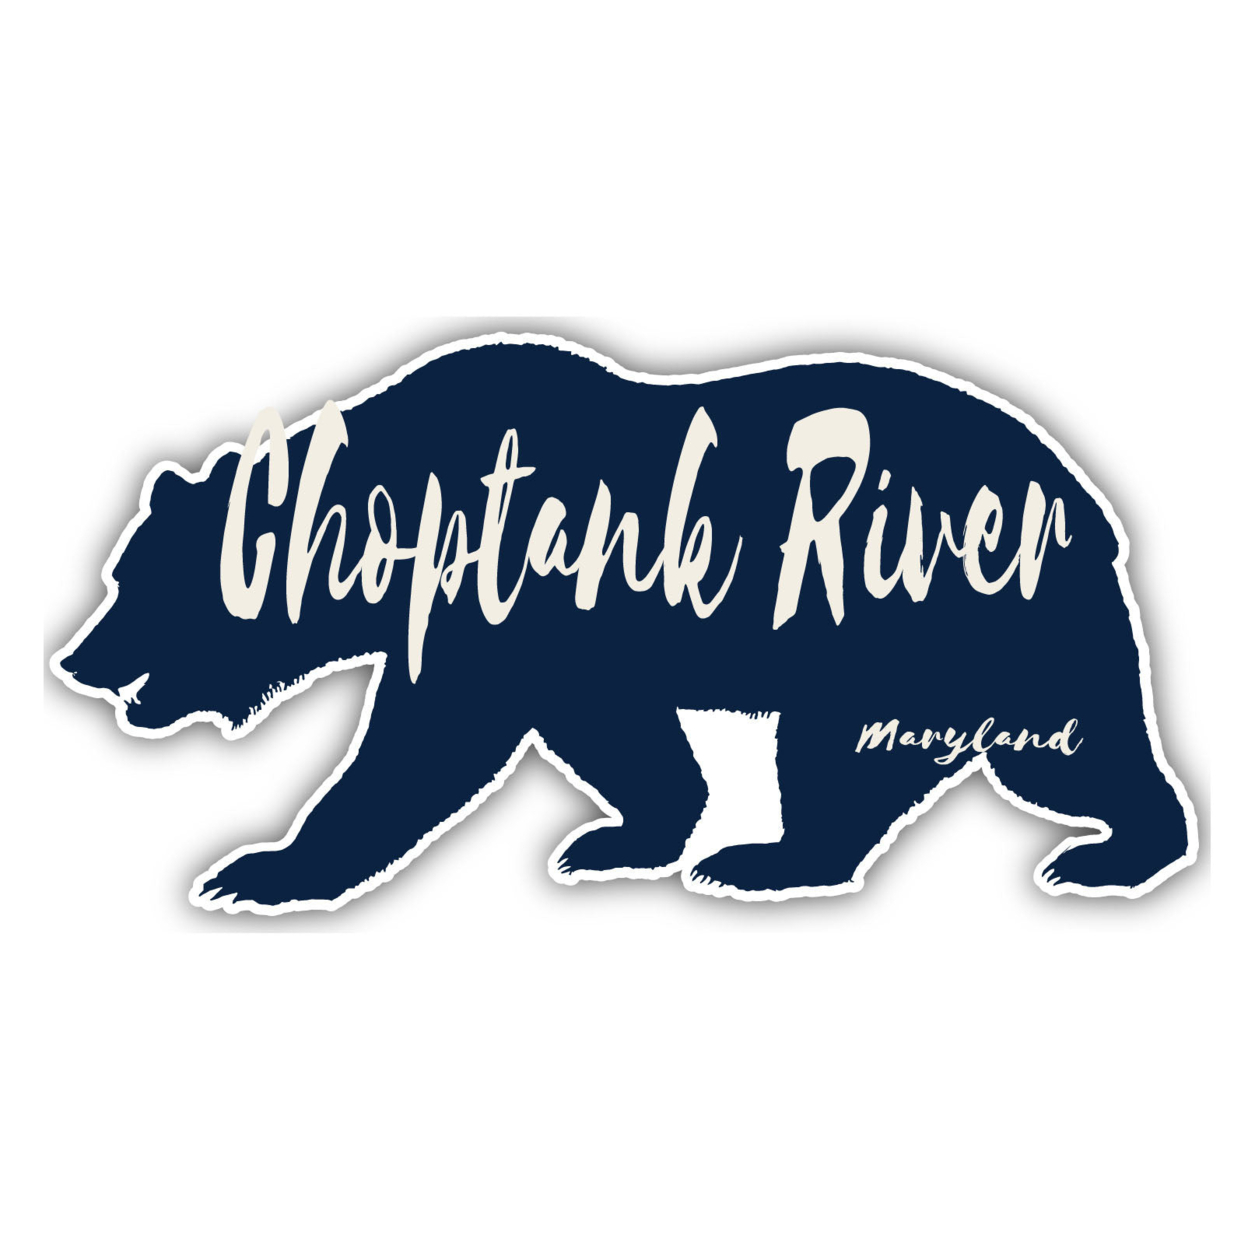 Choptank River Maryland Souvenir Decorative Stickers (Choose Theme And Size) - Single Unit, 10-Inch, Bear